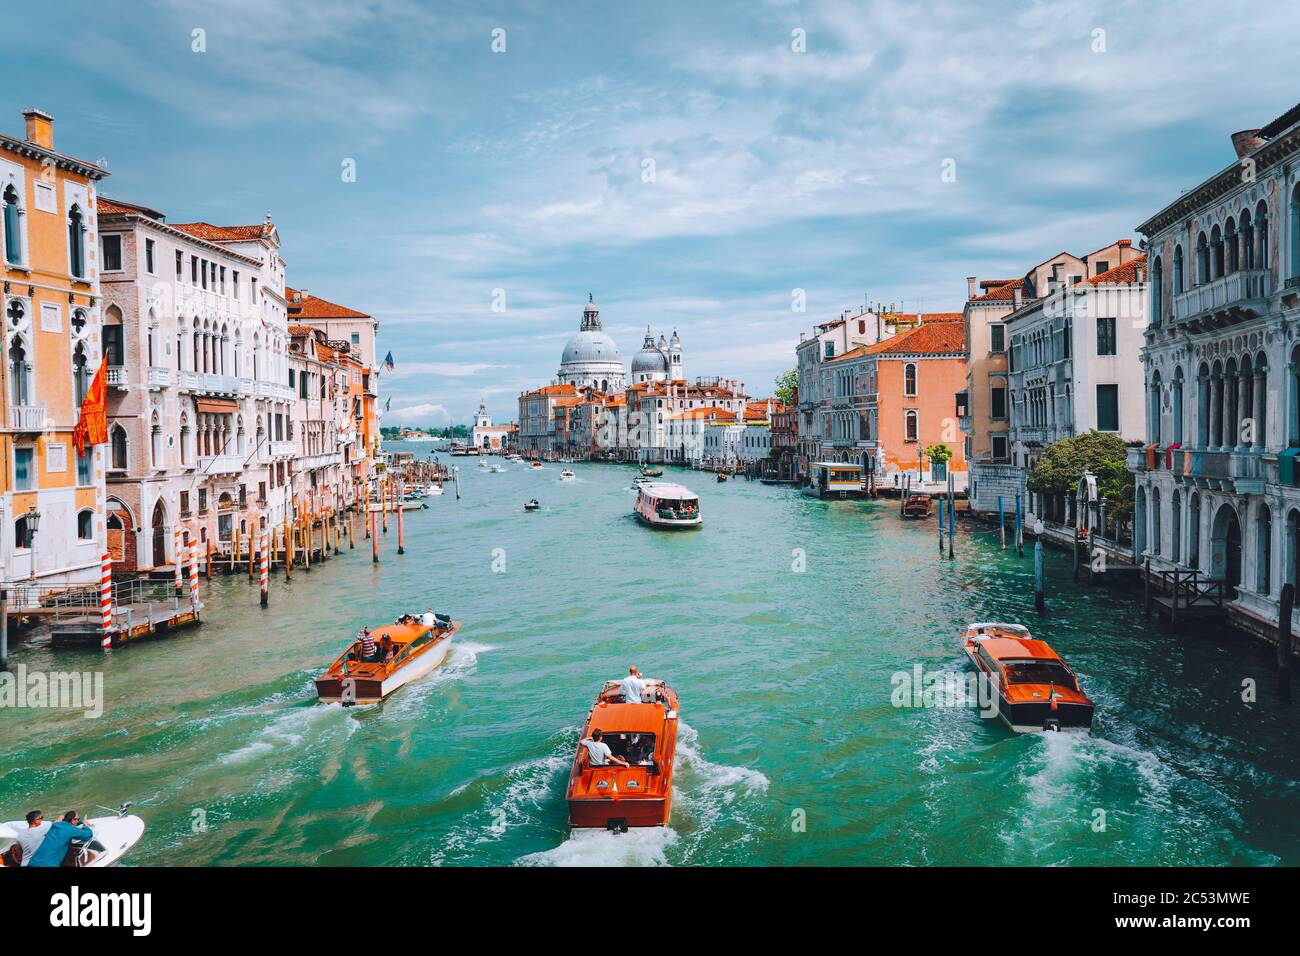 Venice, Italy. Tourist boats in Grand Canal with Basilica Santa Maria della Salute view in background. Stock Photo